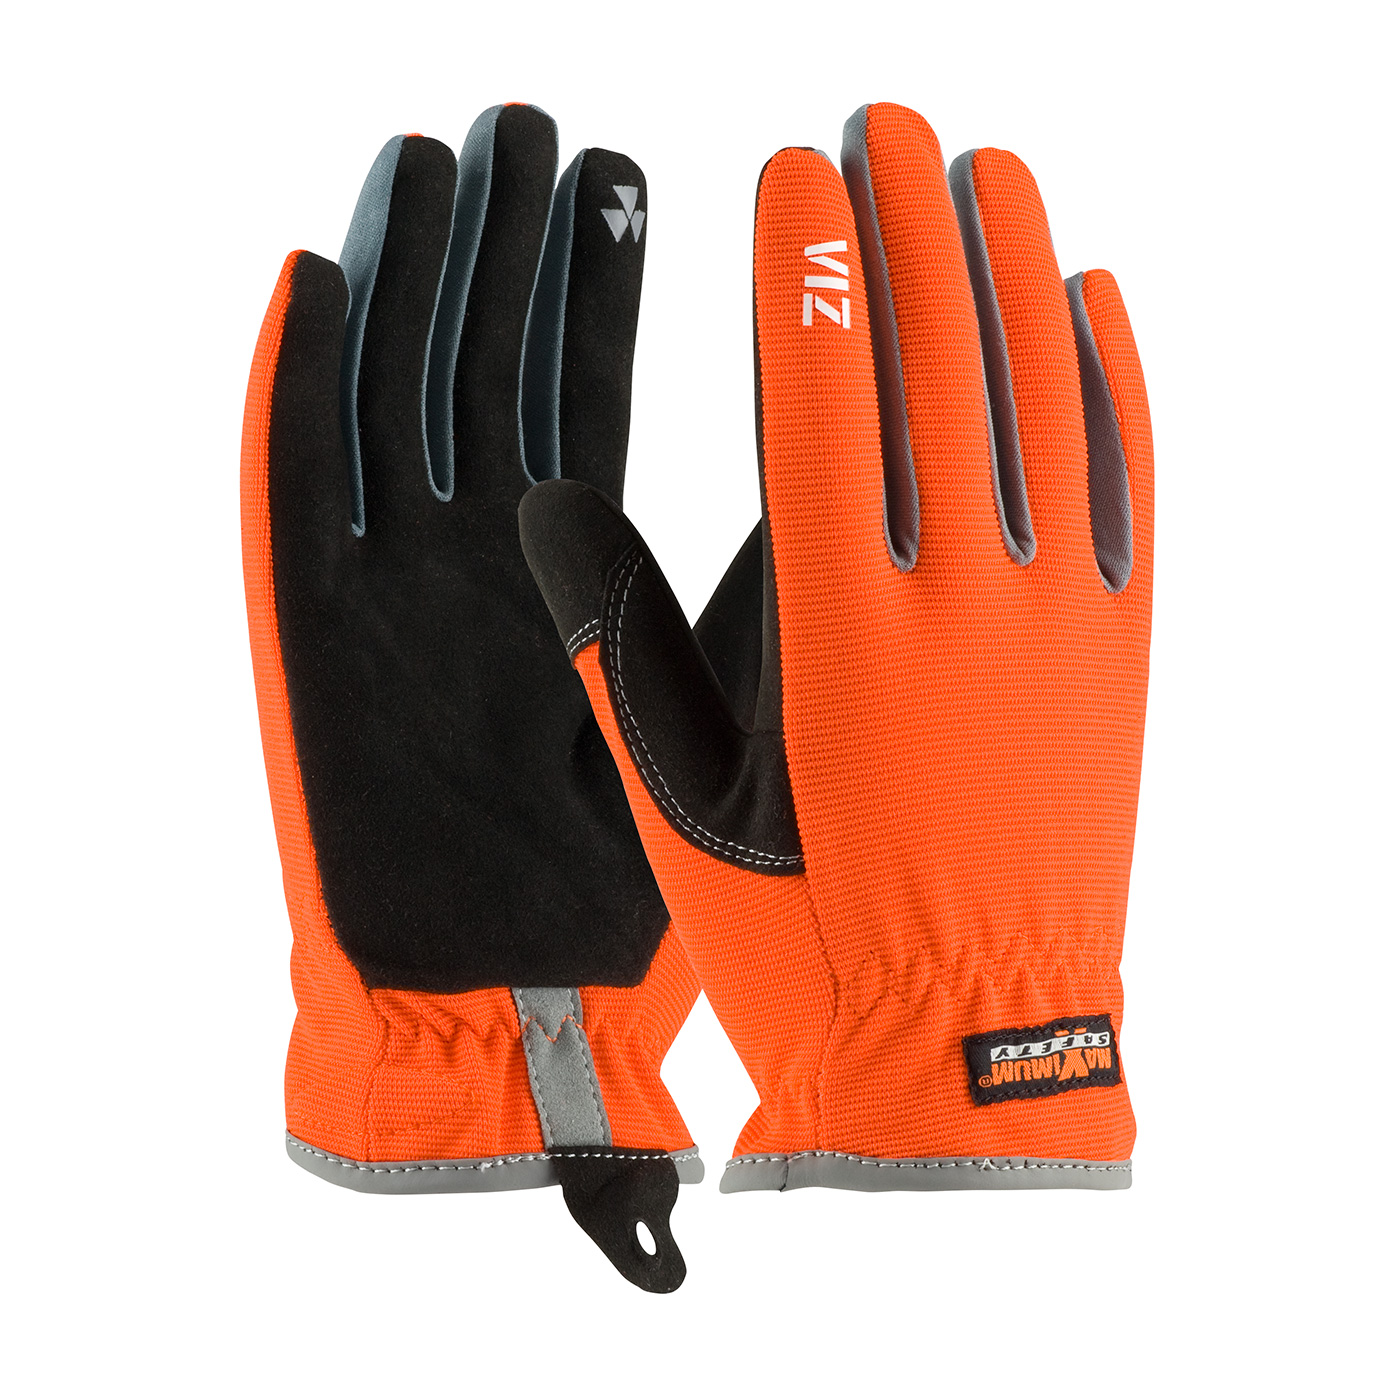 PIP 120-4600/XL Mechcanic Hi-Viz Maximum Safety Glove - X-Large PID-120 4600 XL